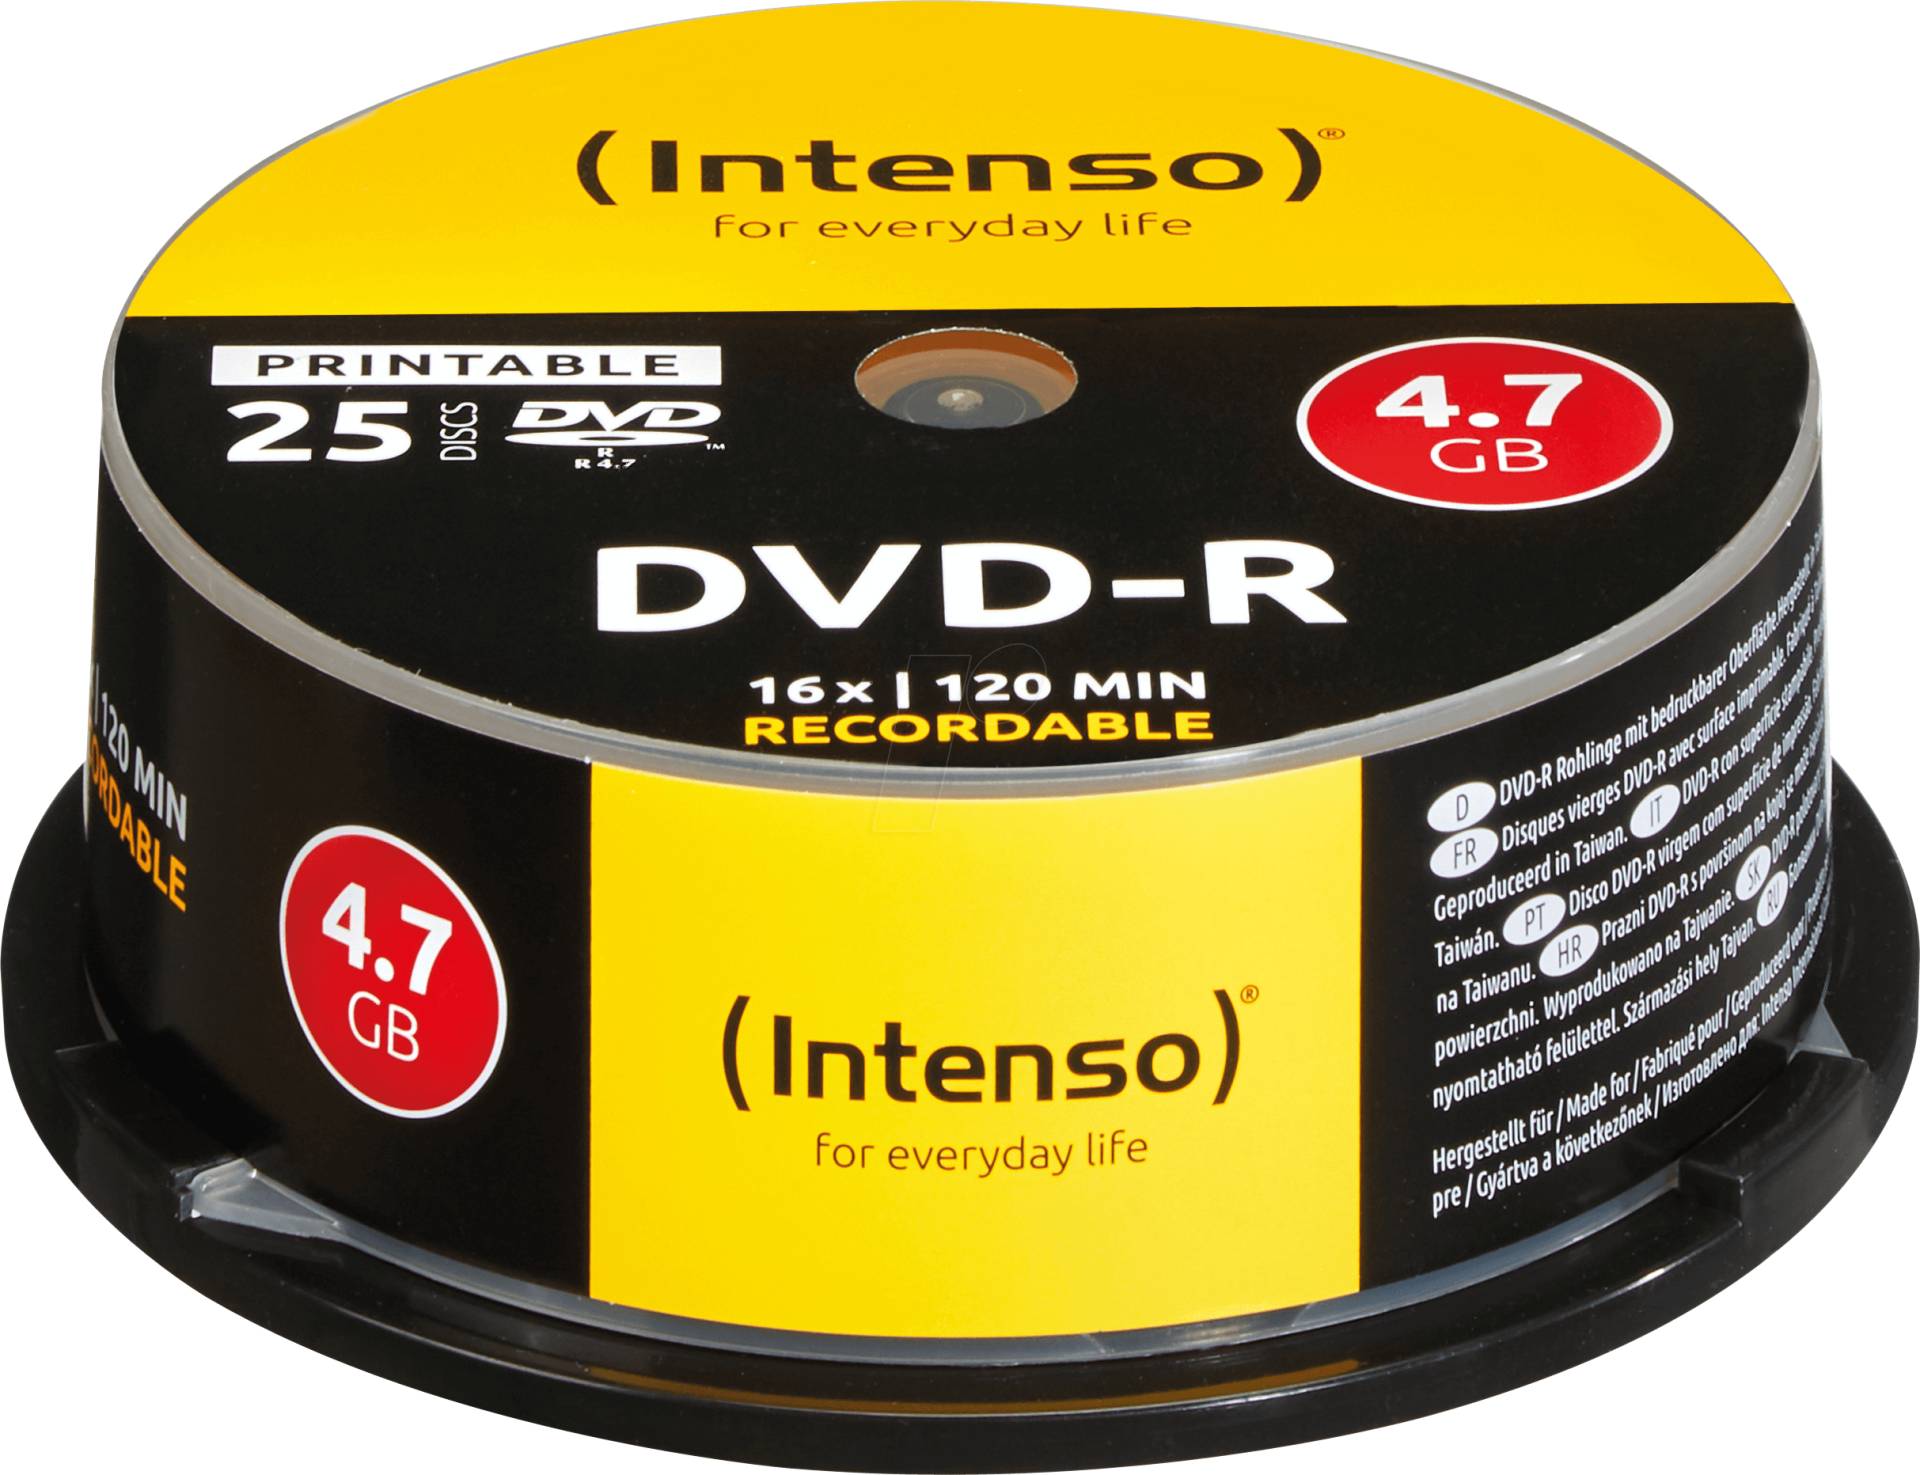 DVD-R4,7 INT25P - Intenso DVD-R 4,7GB, 25-er, printable von Intenso